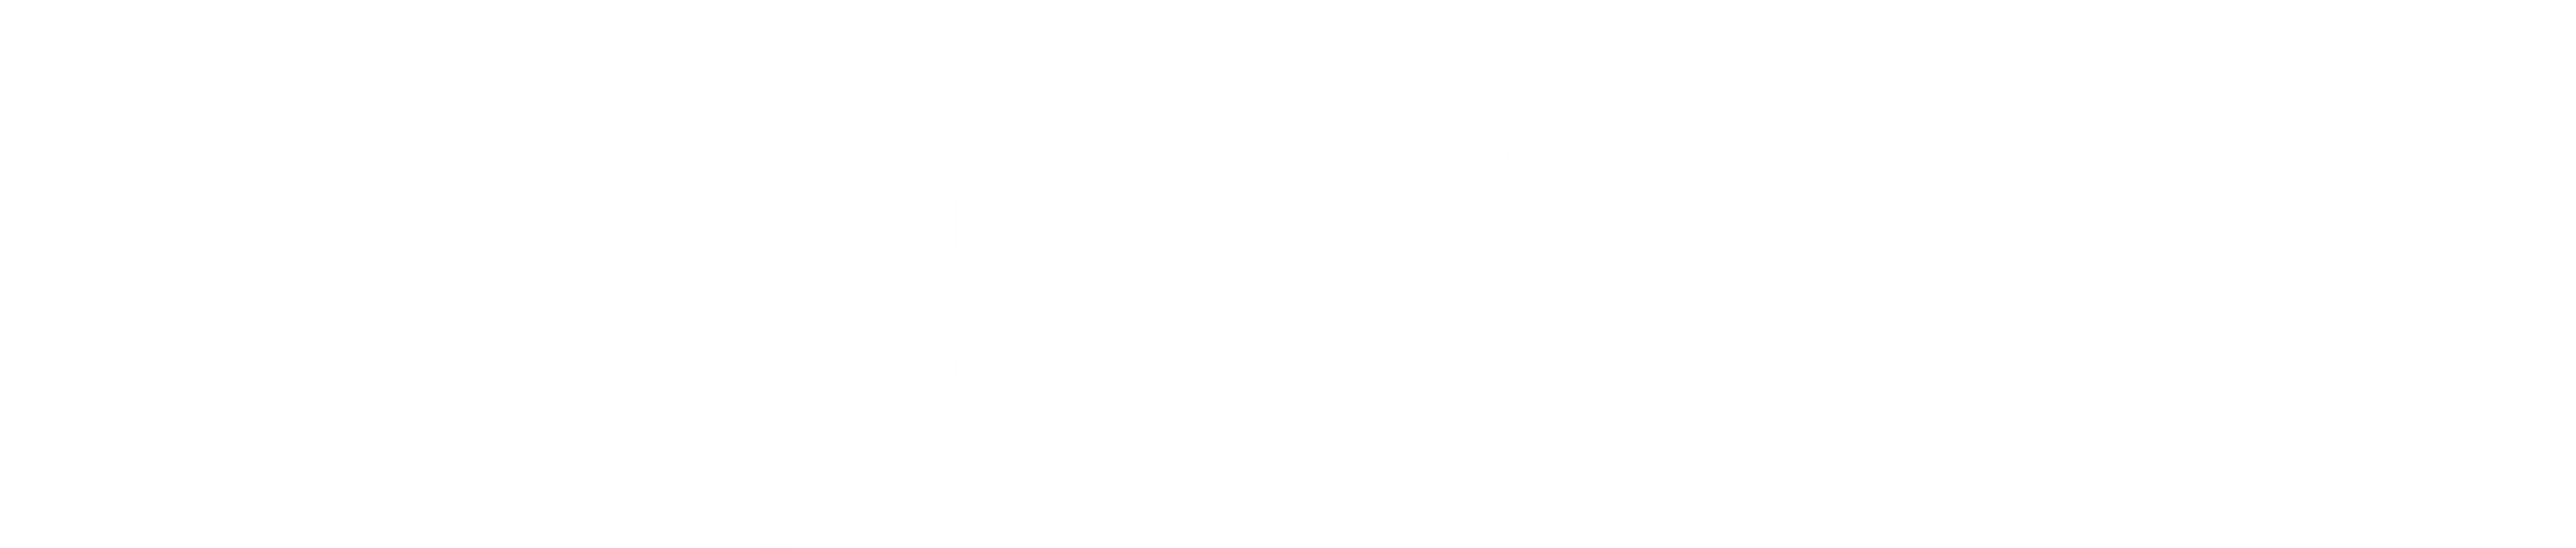 The Sixth Sense logo